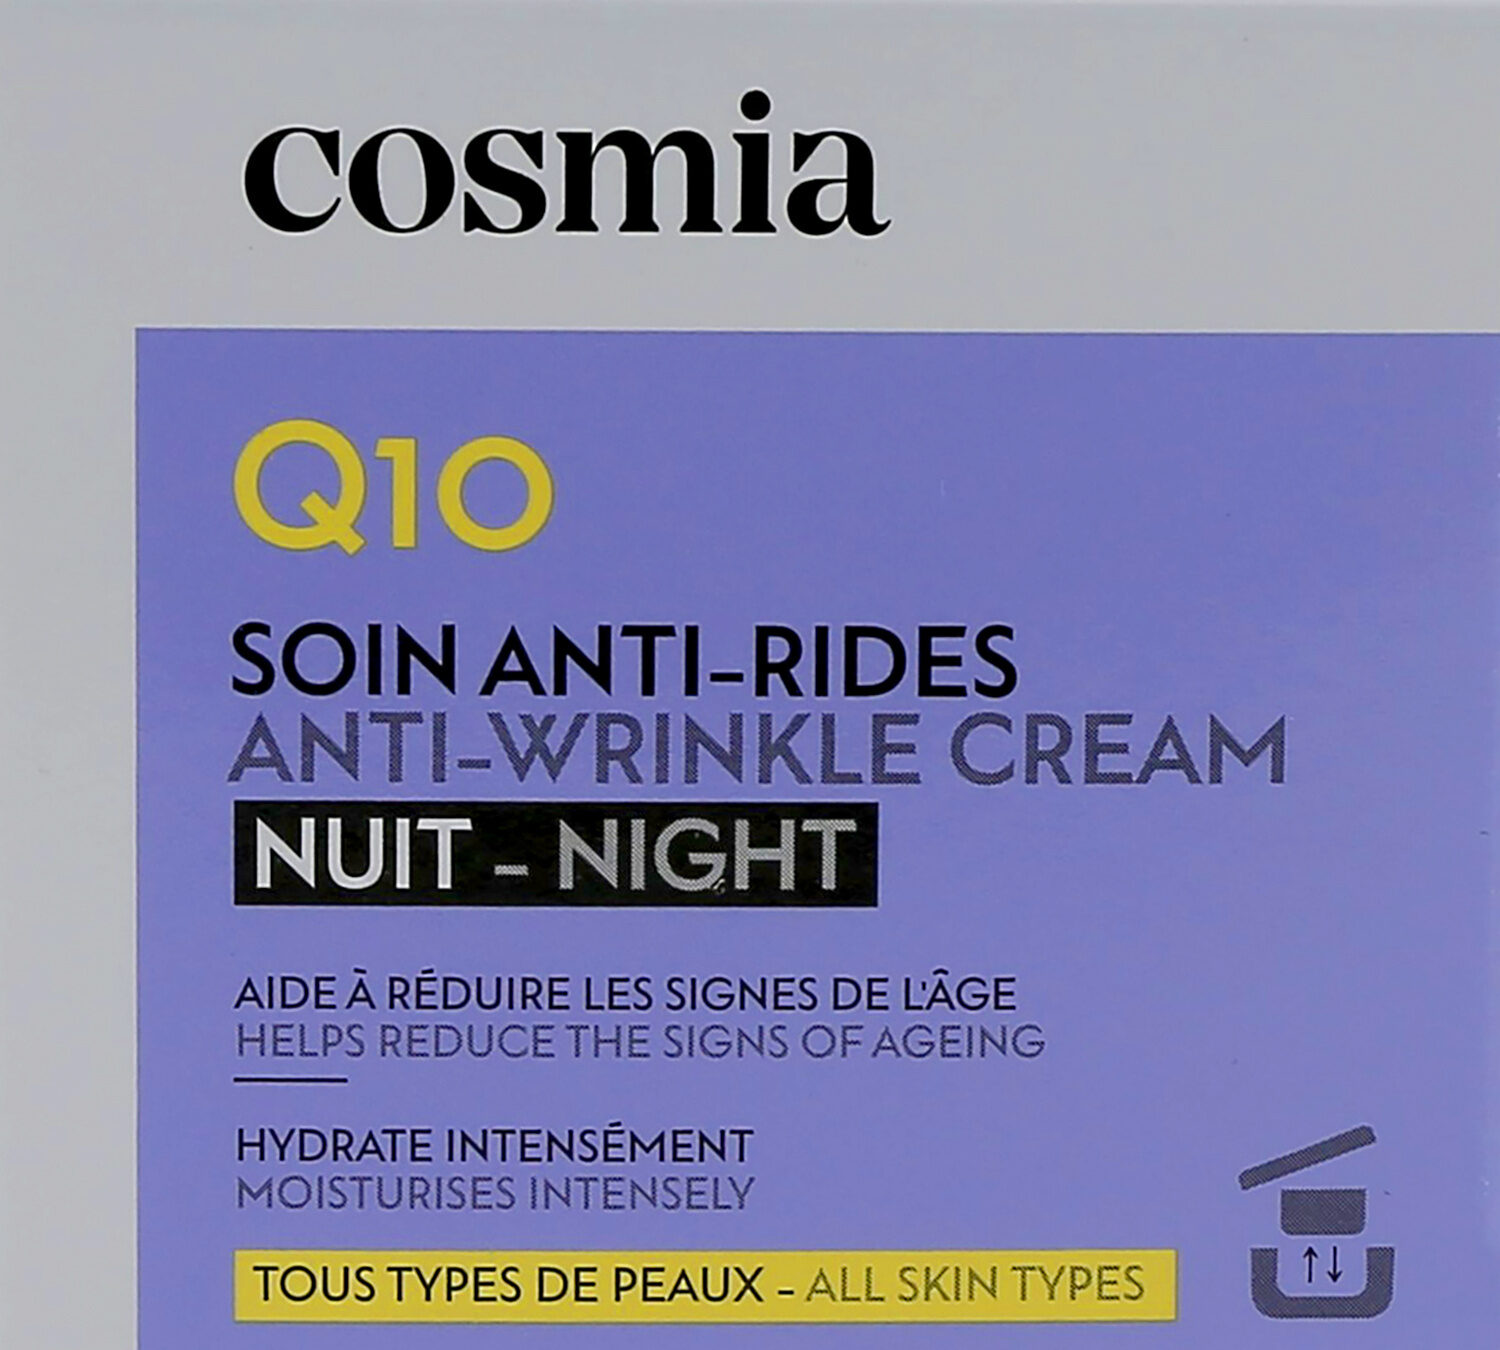 Cosmia creme nuit - anti ride - q10 50ml - Product - fr